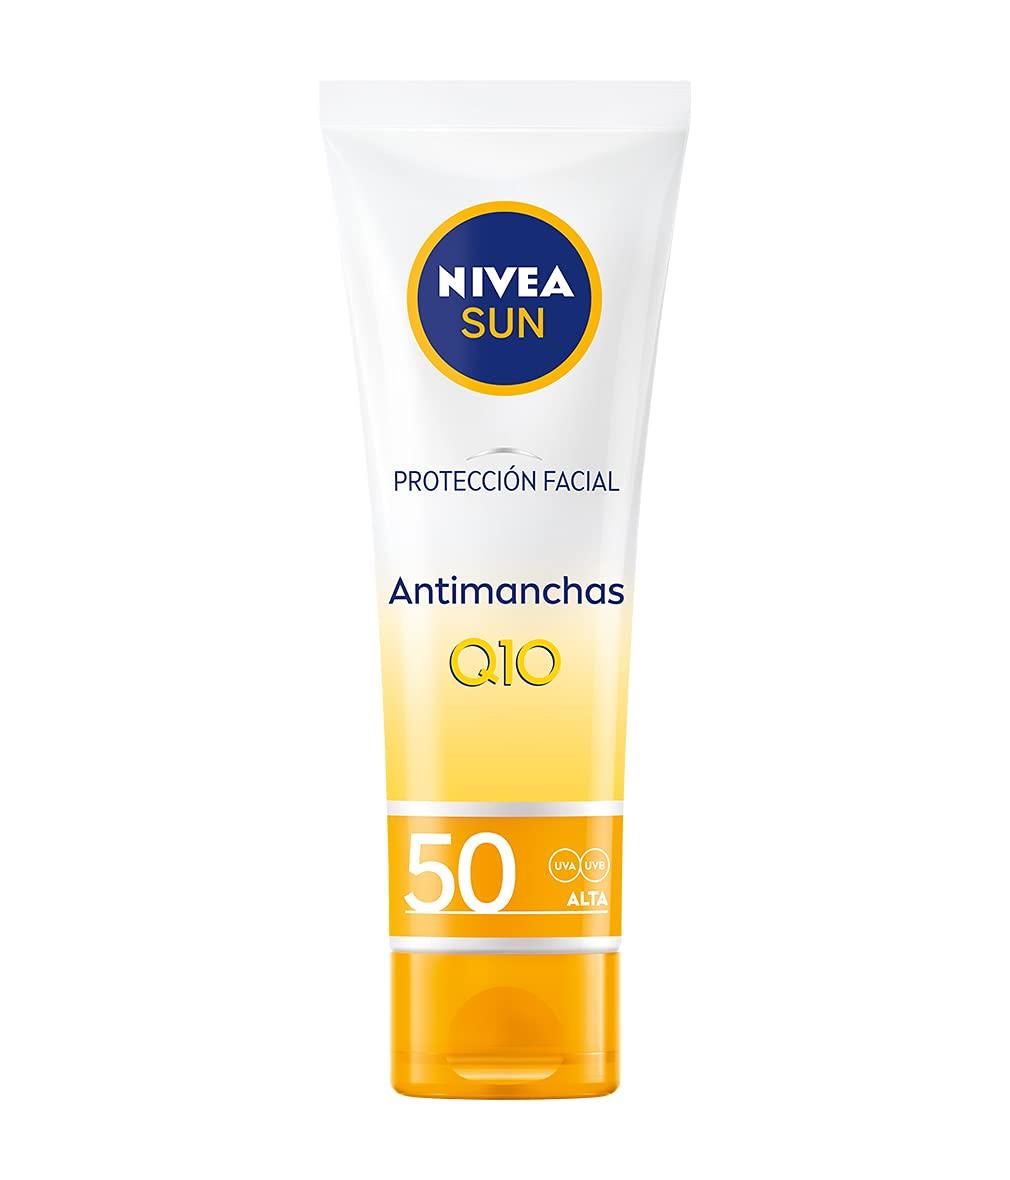 Crema facial de protección solar de Nivea